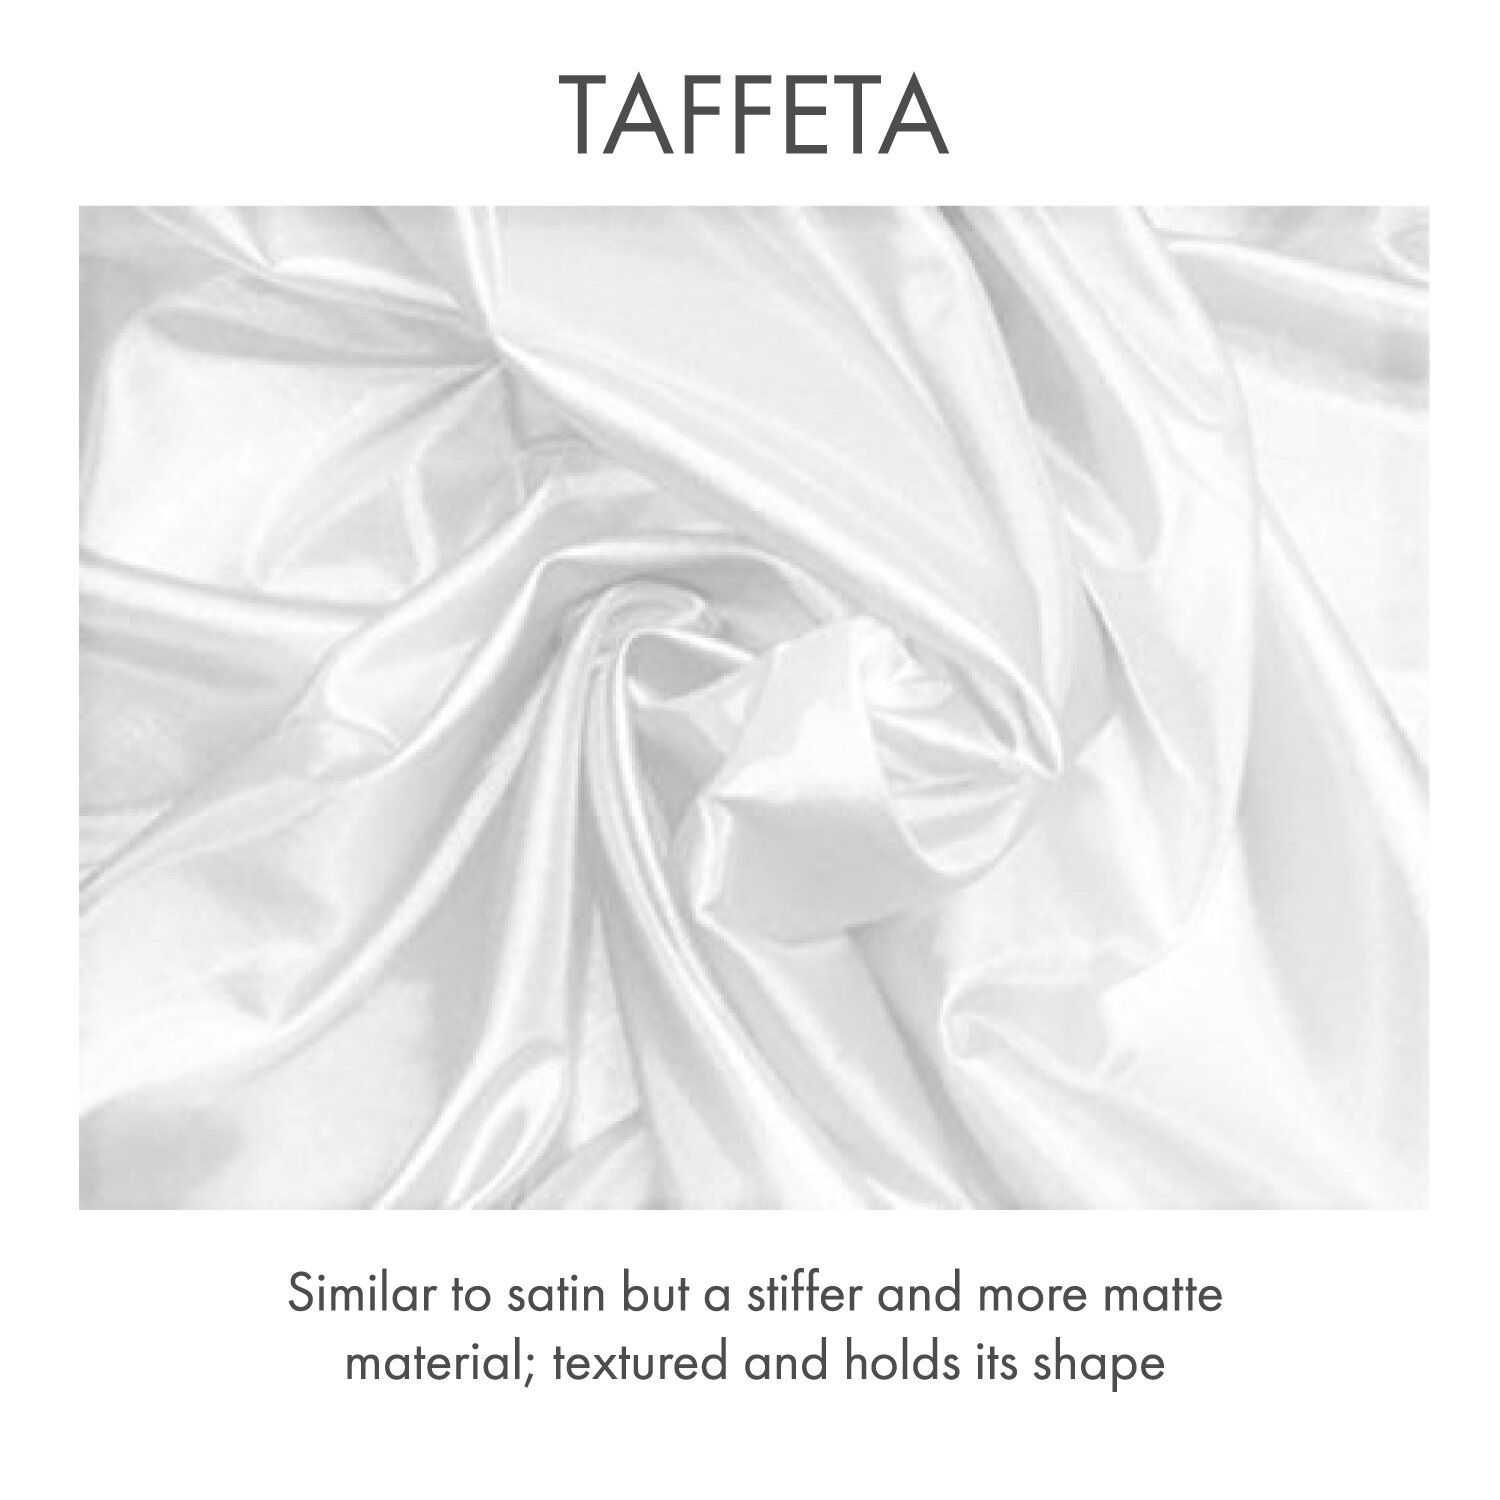 taffeta-category.jpg